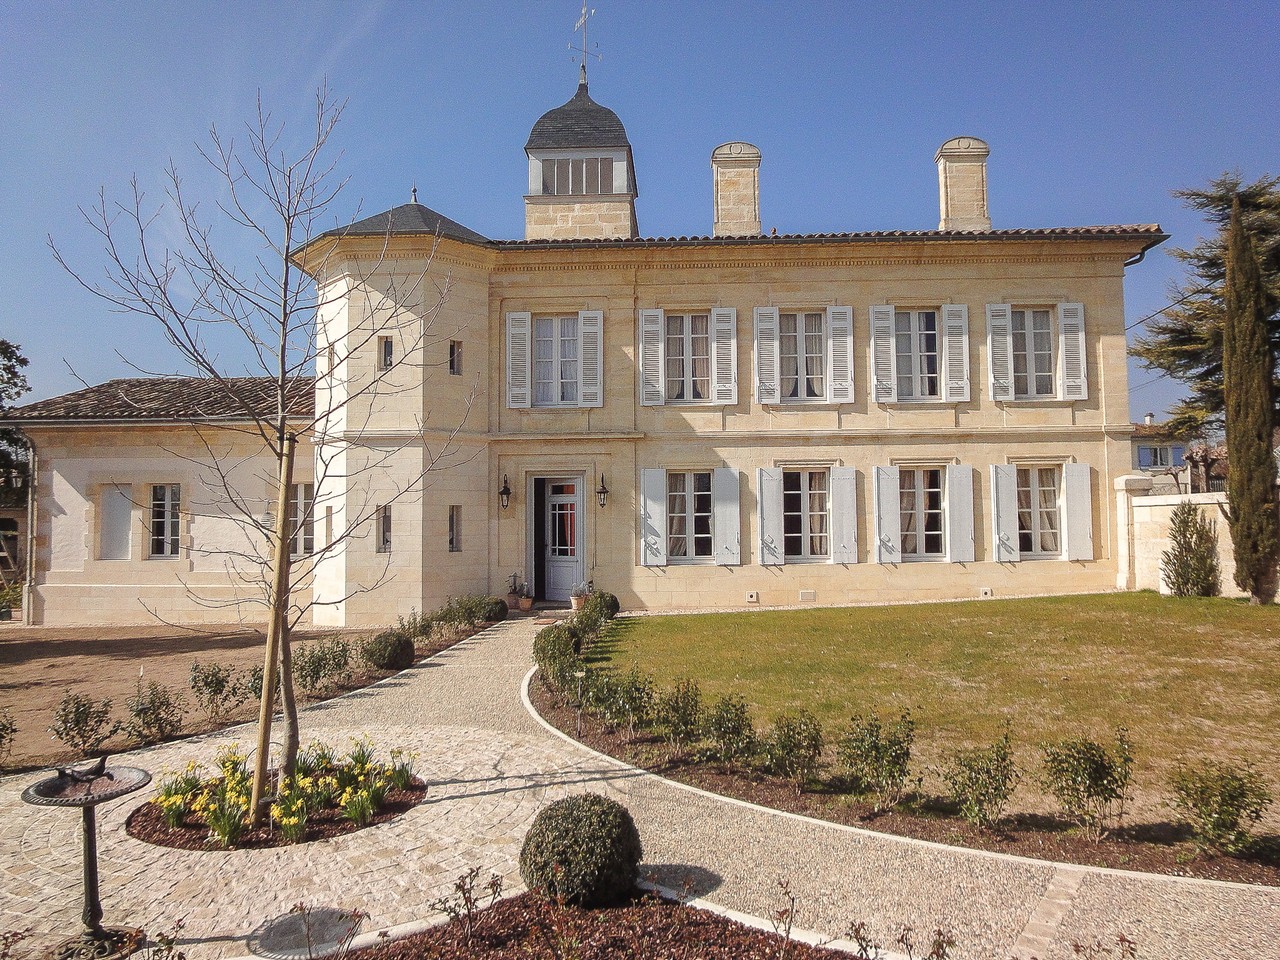 Villa storica del 1850 a Saint-Émilion, nell’Aquitania, in Francia